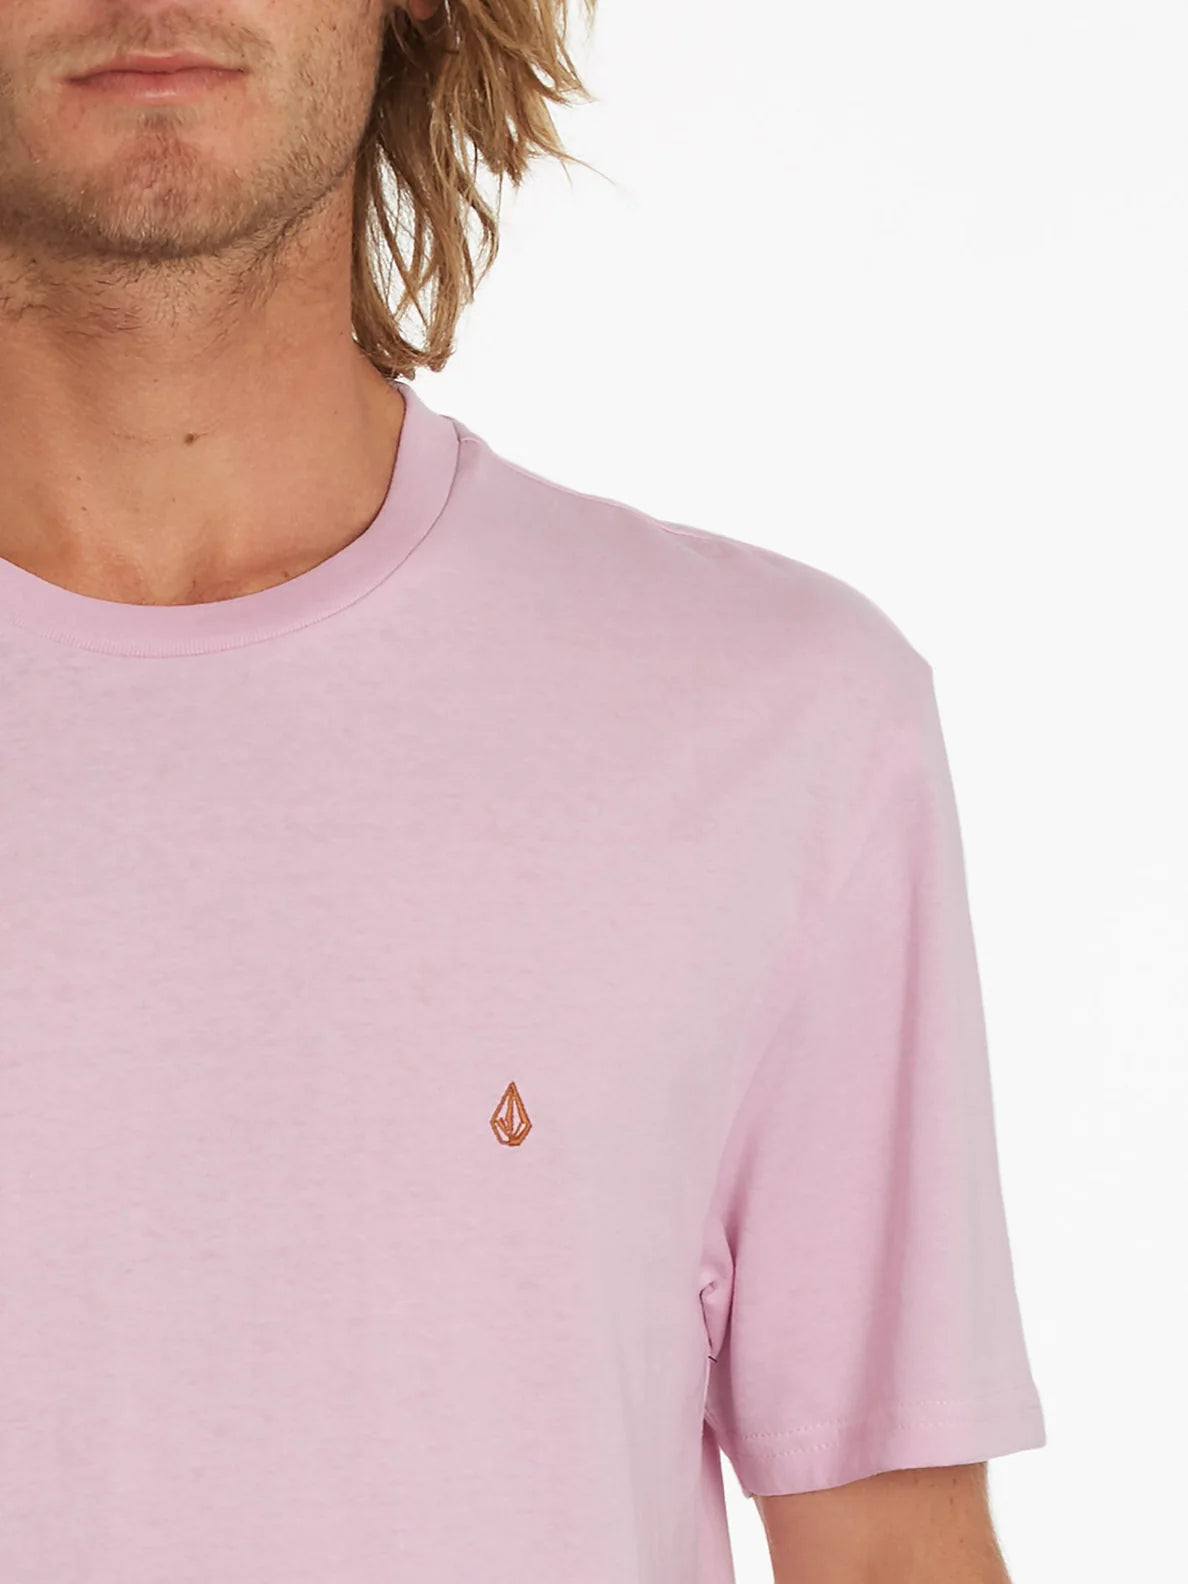 Volcom Stone Blanks Paradise Pink T-Shirt | Herren-T-Shirts | Kurzarm-T-Shirts für Herren | Meistverkaufte Produkte | Neue Produkte | Neueste Produkte | Sammlung_Zalando | Volcom-Shop | surfdevils.com